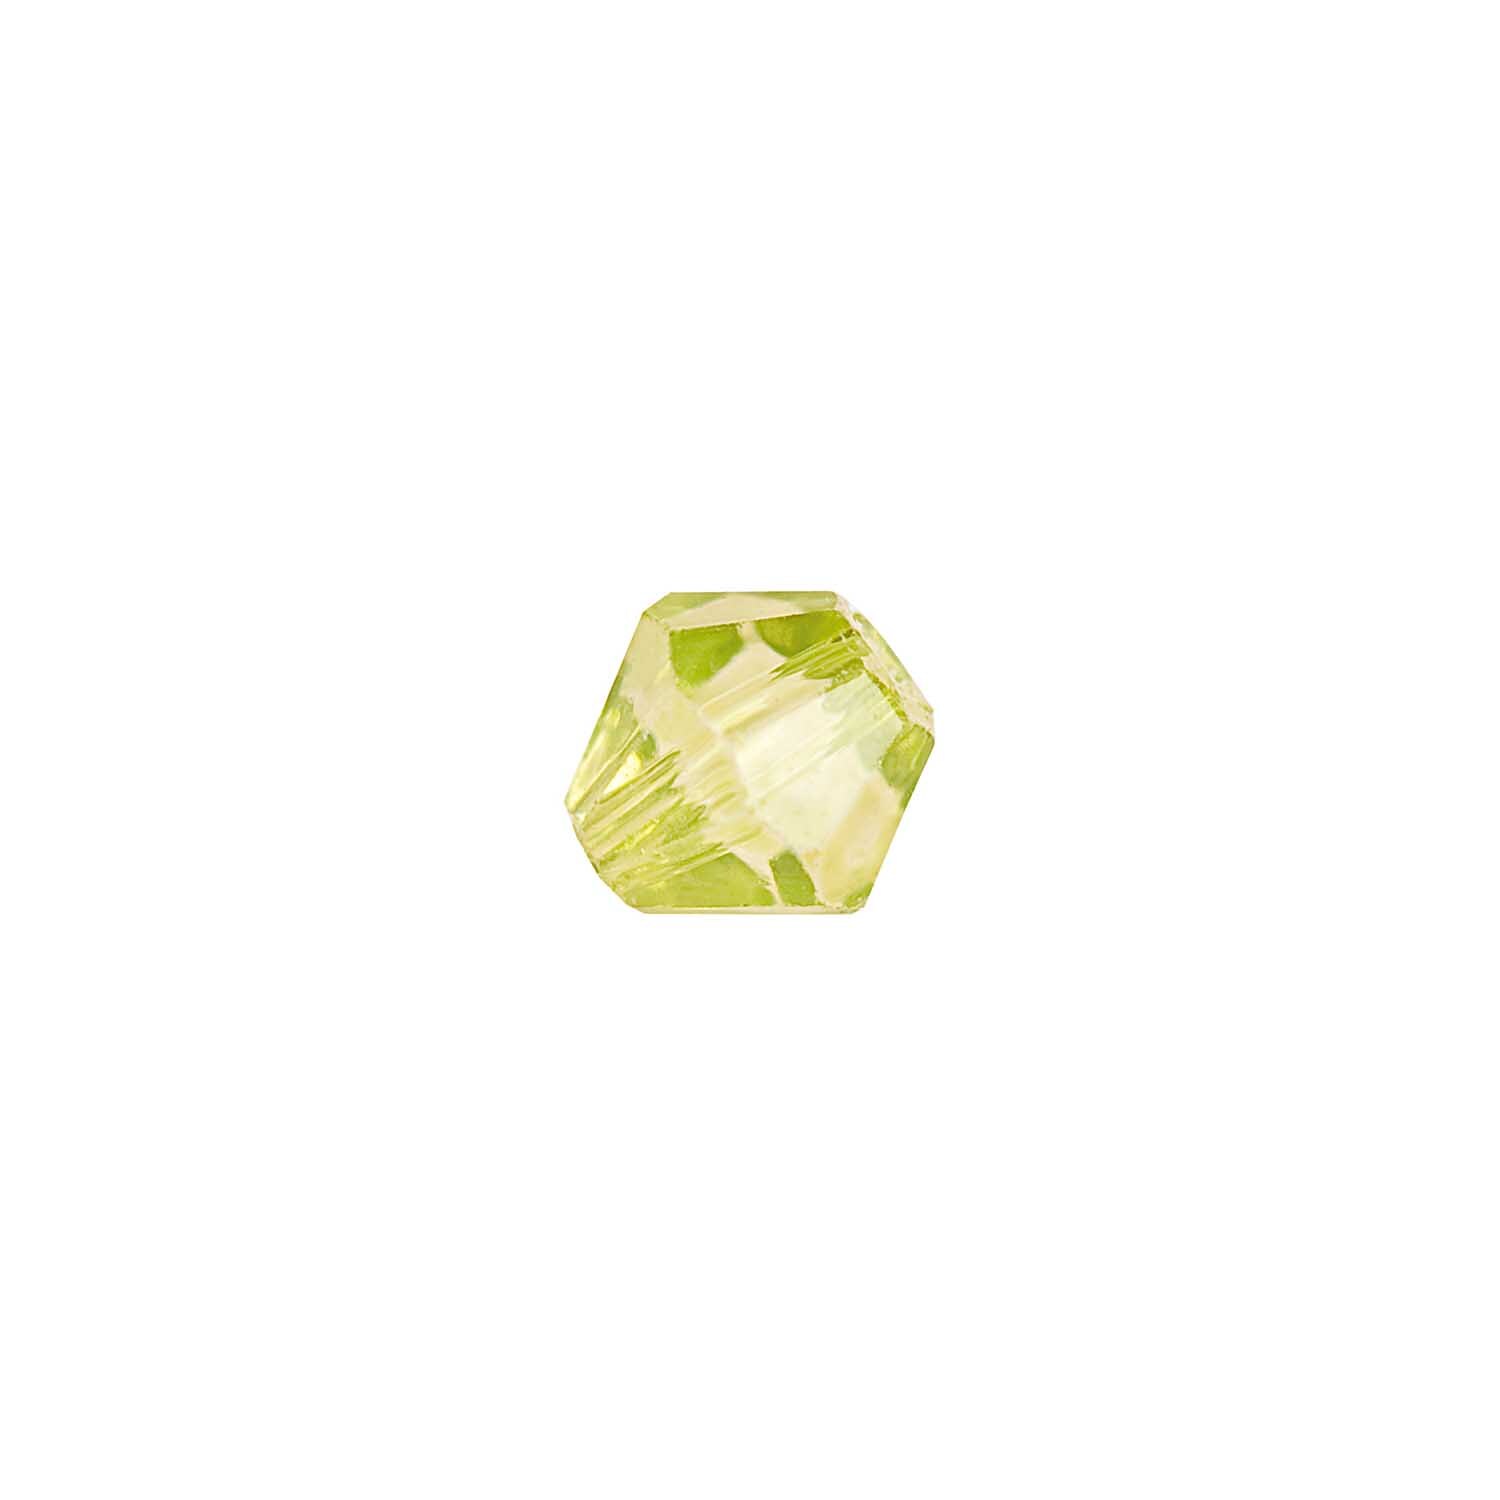 Glasschliff-Raute Perlen 4mm 20 Stück